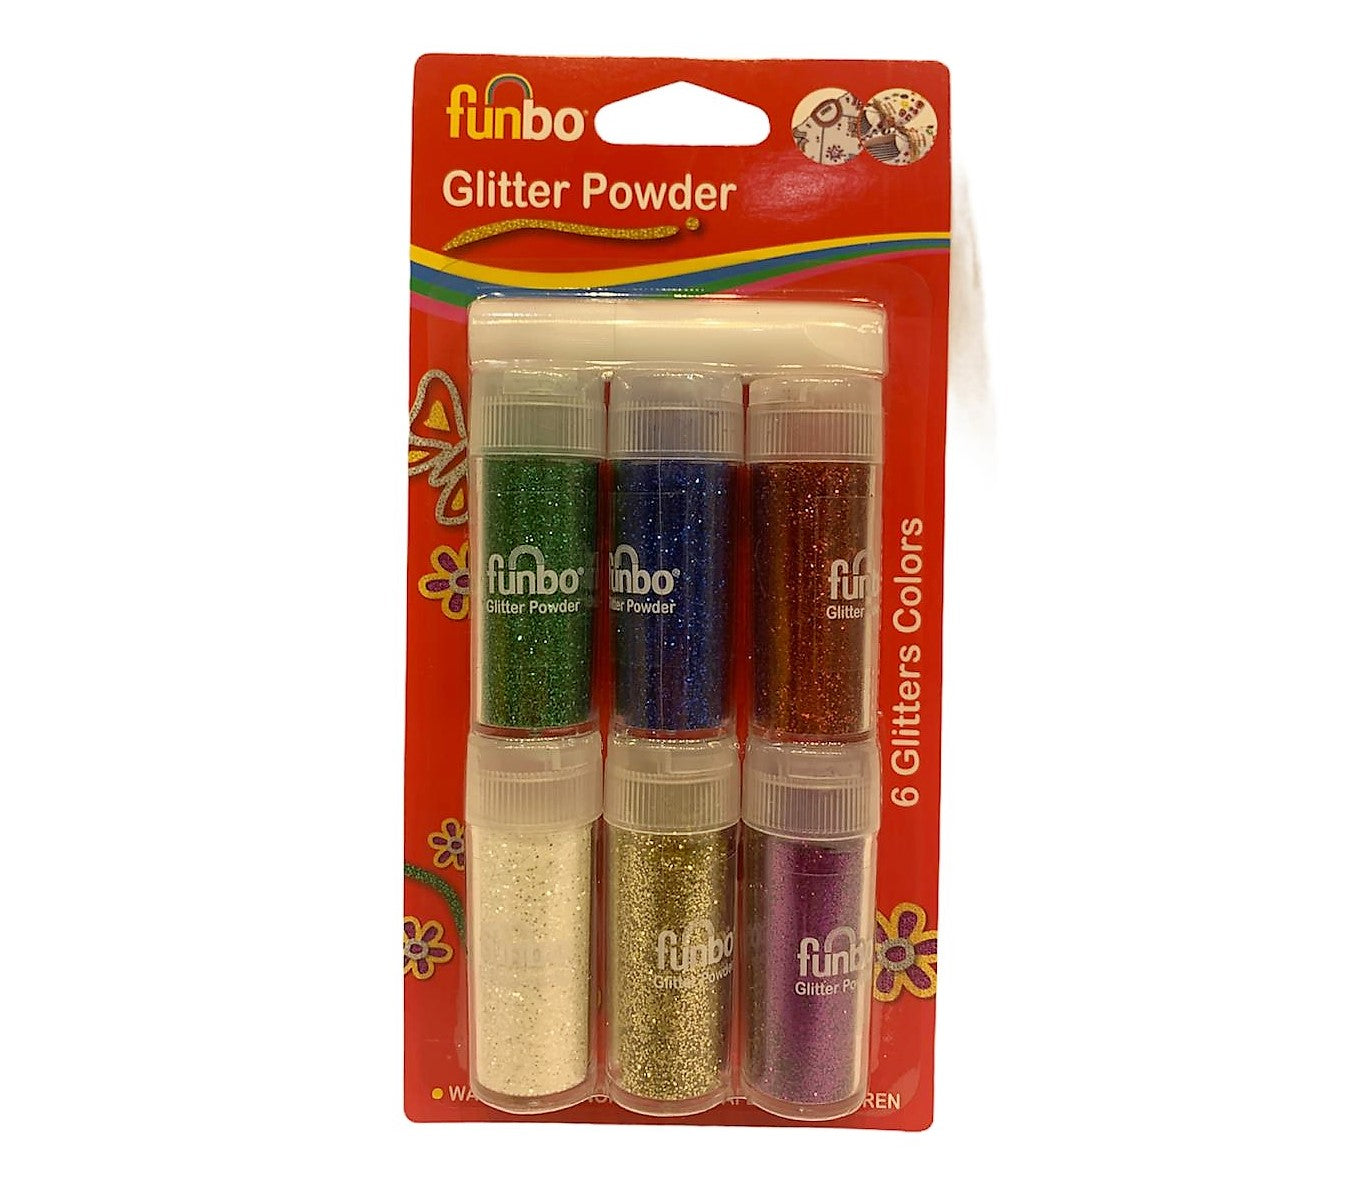 Funbo Glitter Powder 6 Colors